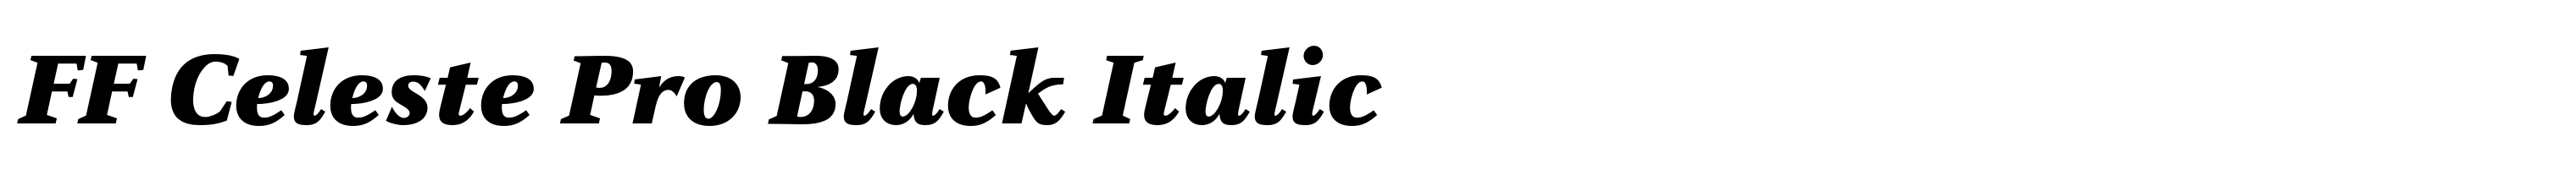 FF Celeste Pro Black Italic